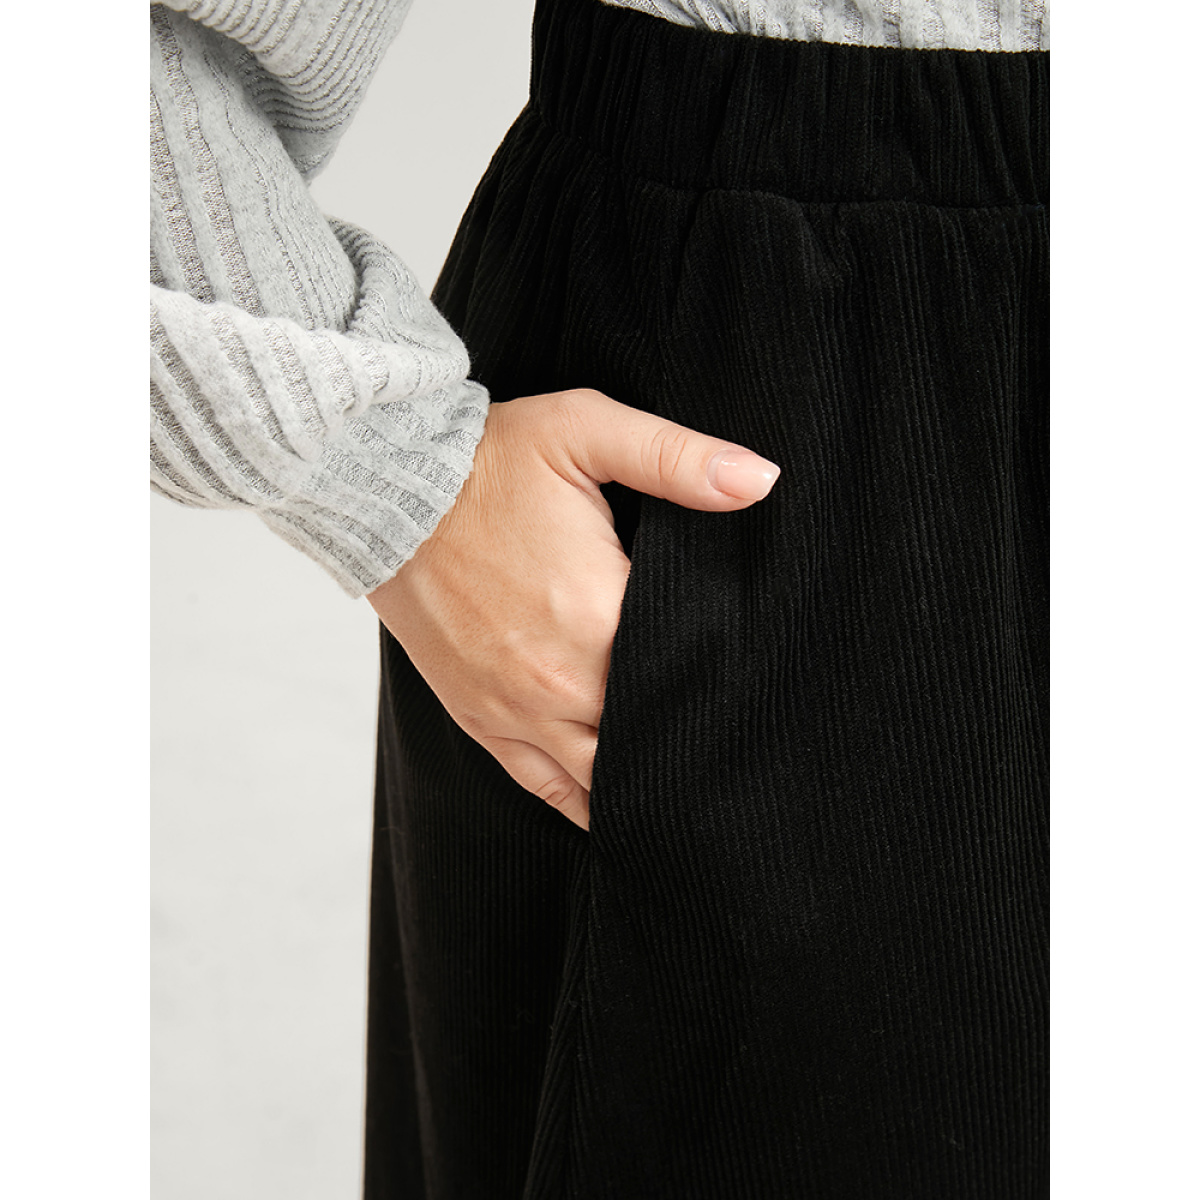 

Plus Size Solid Button Detail Pocket Elastic Waist Corduroy Skirt Women Black Elegant Button No stretch Pocket Dailywear Skirts BloomChic